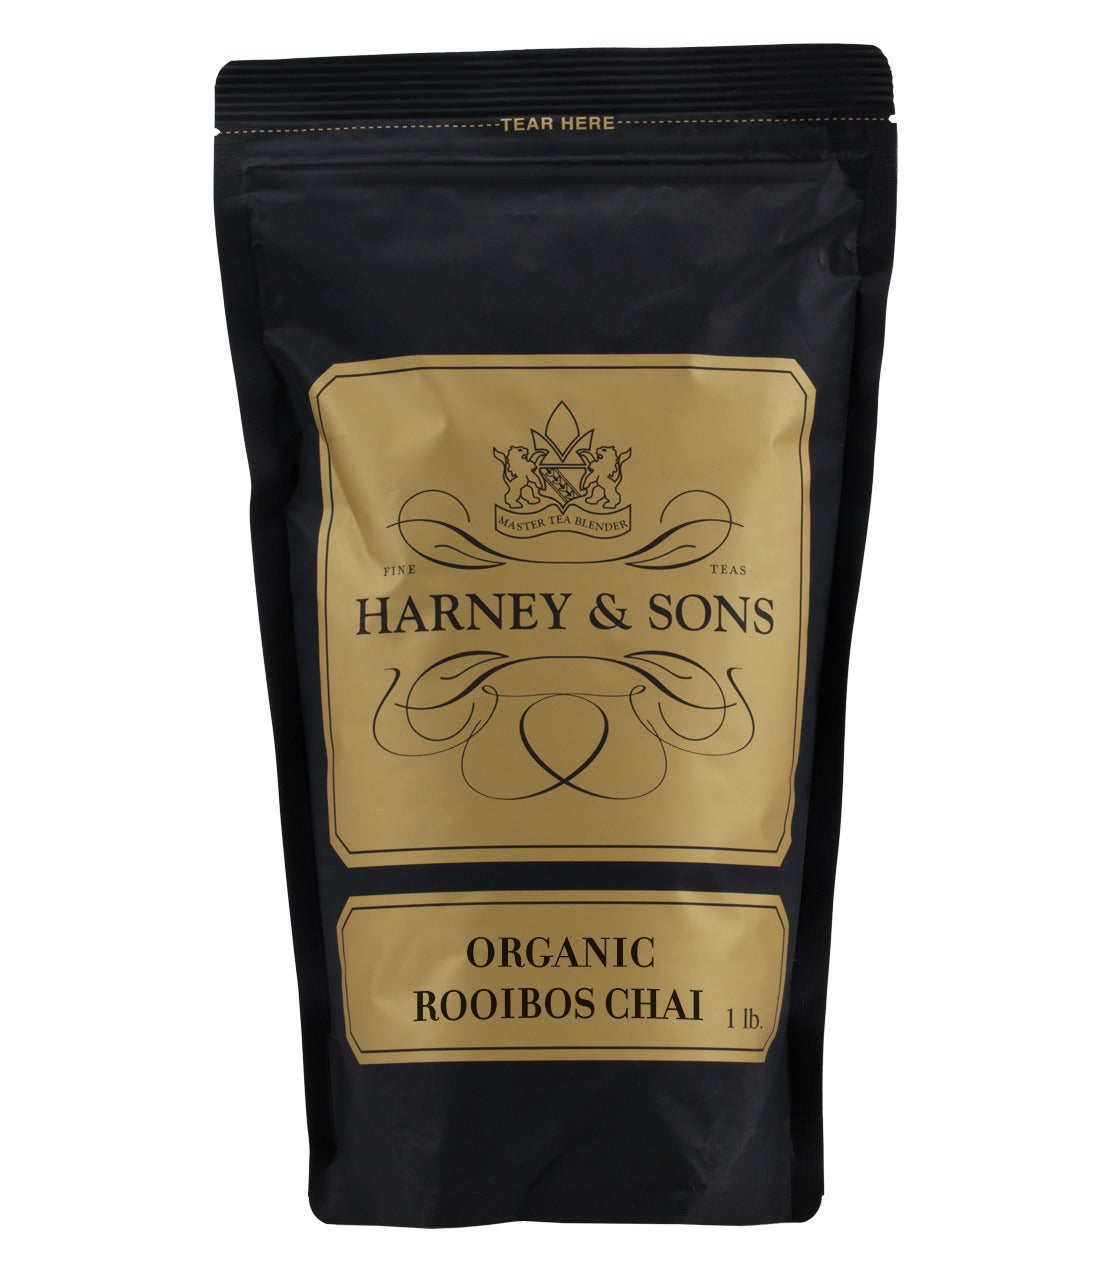 Organic Rooibos Chai - Loose 1 Lb. Bag - Harney & Sons Fine Teas